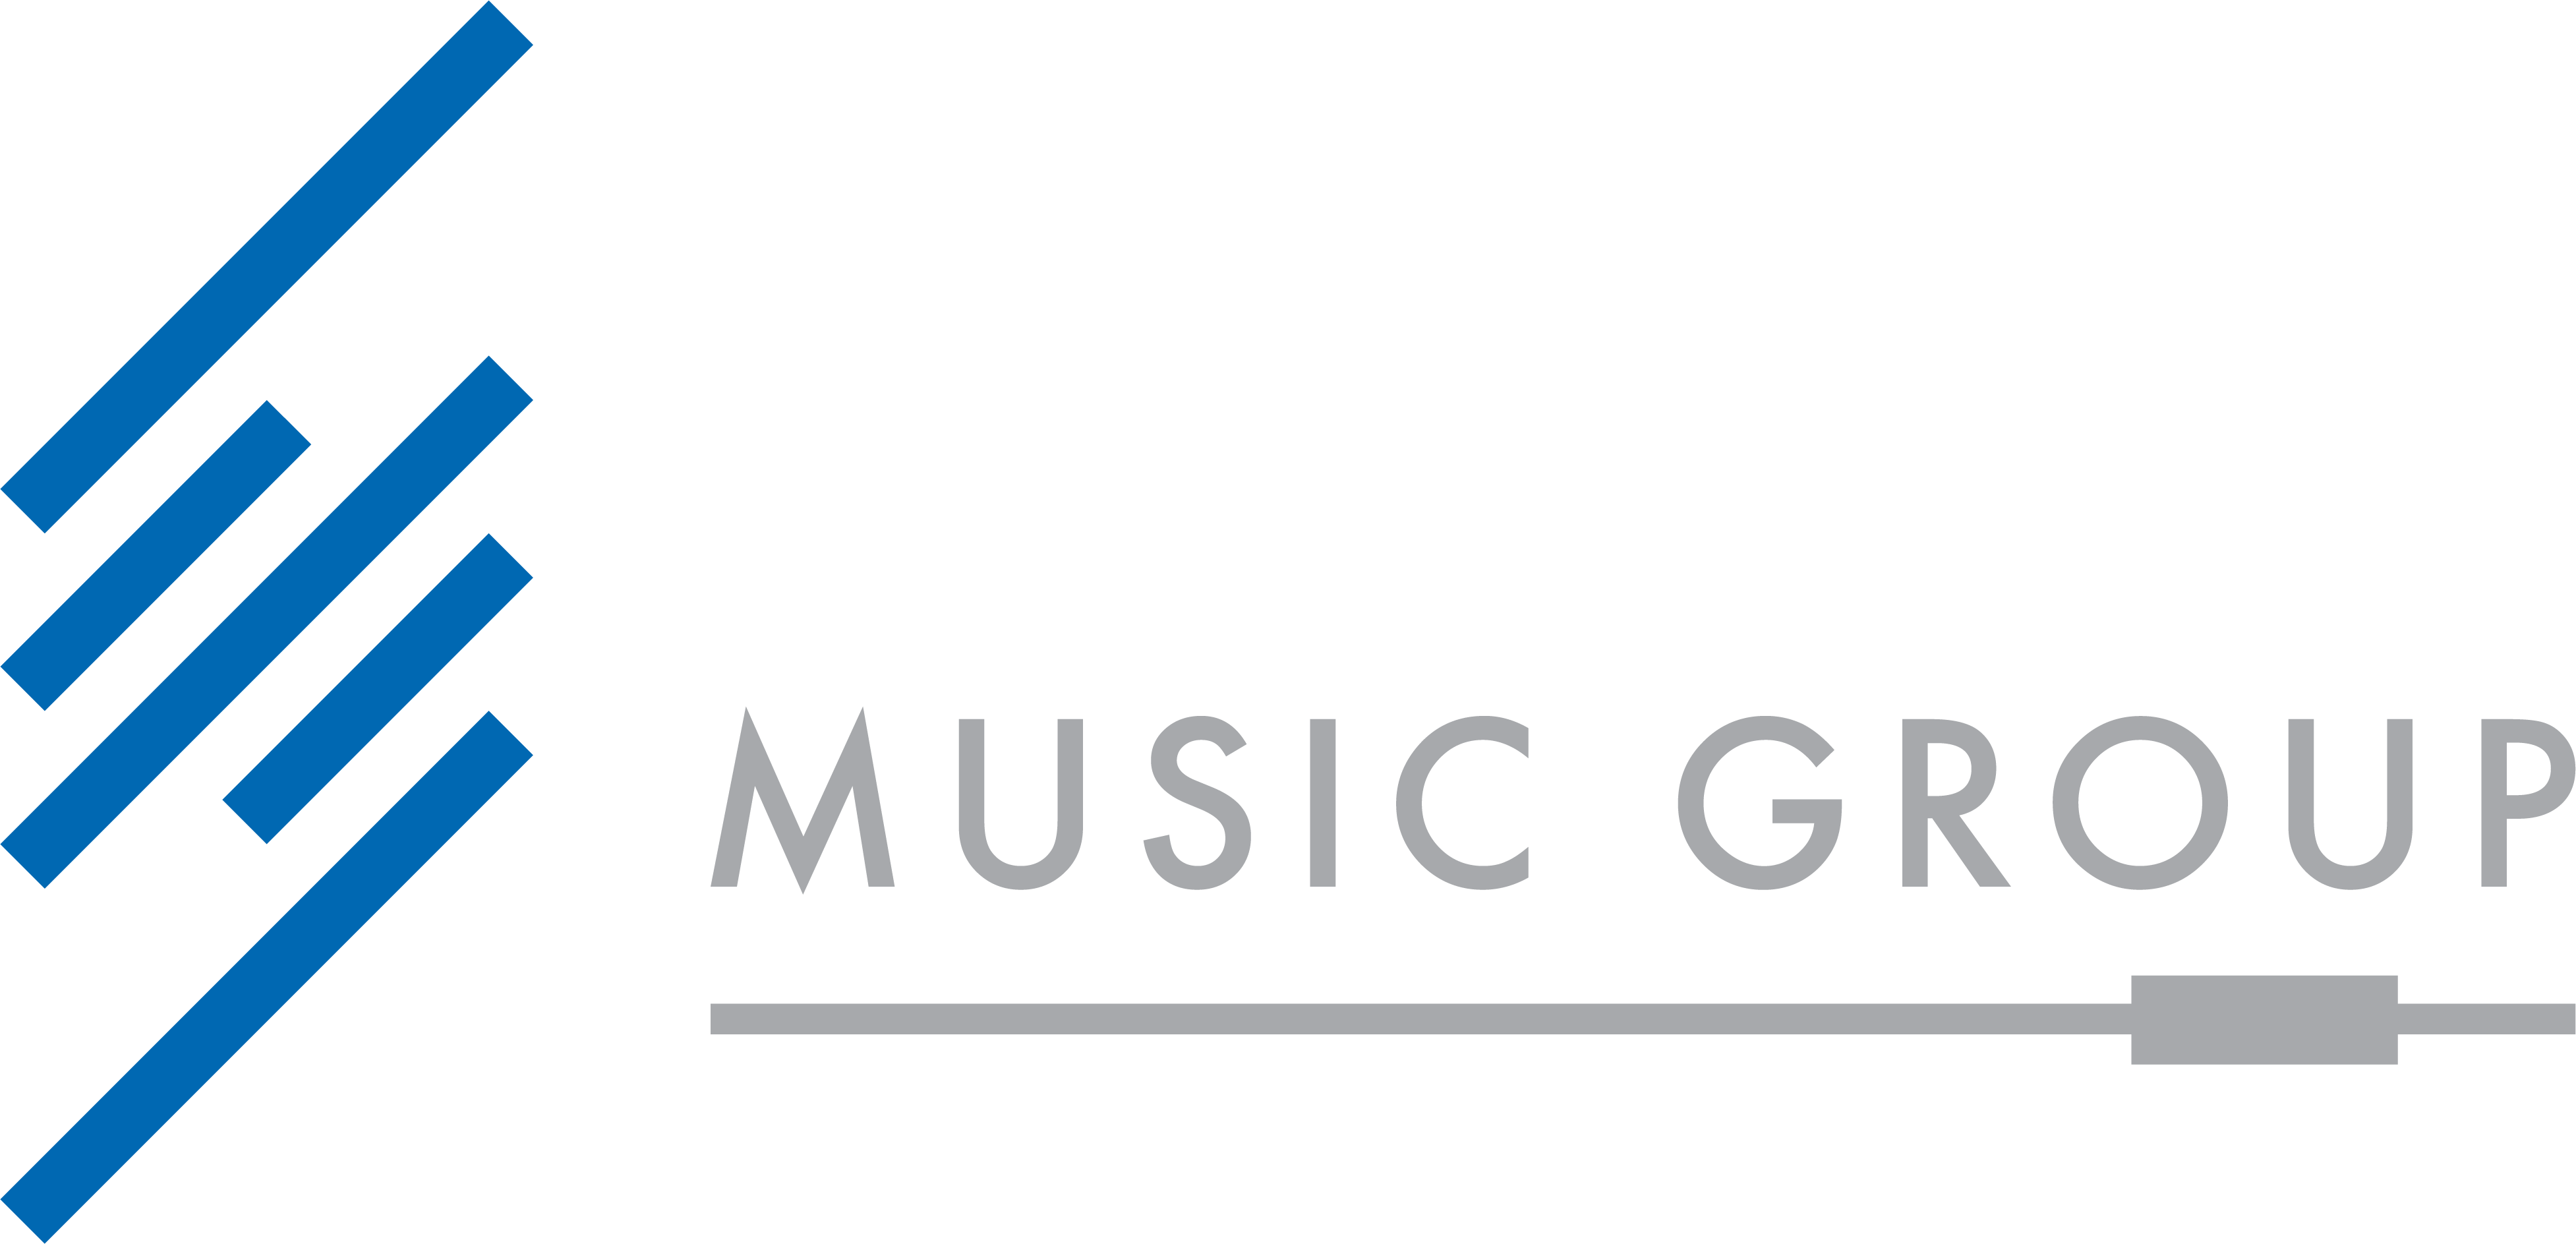 Sadaya Music